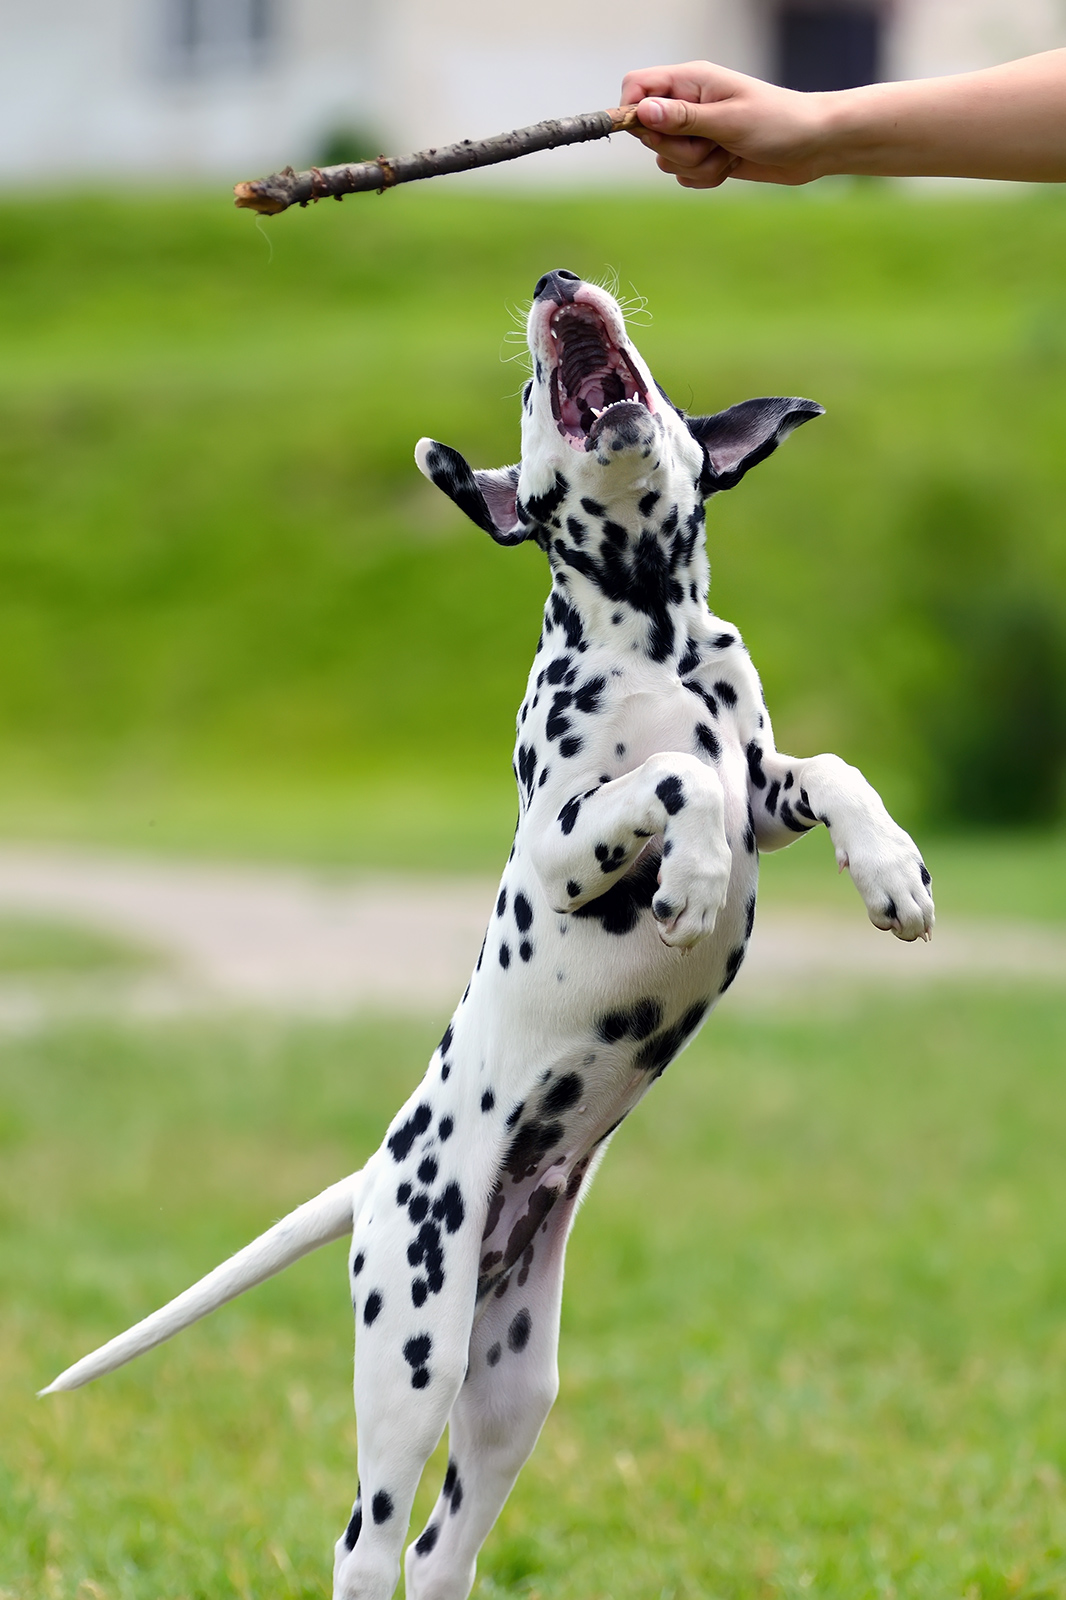 dalmatian-dog-outdoors-in-summer-PRZEDG4.jpg